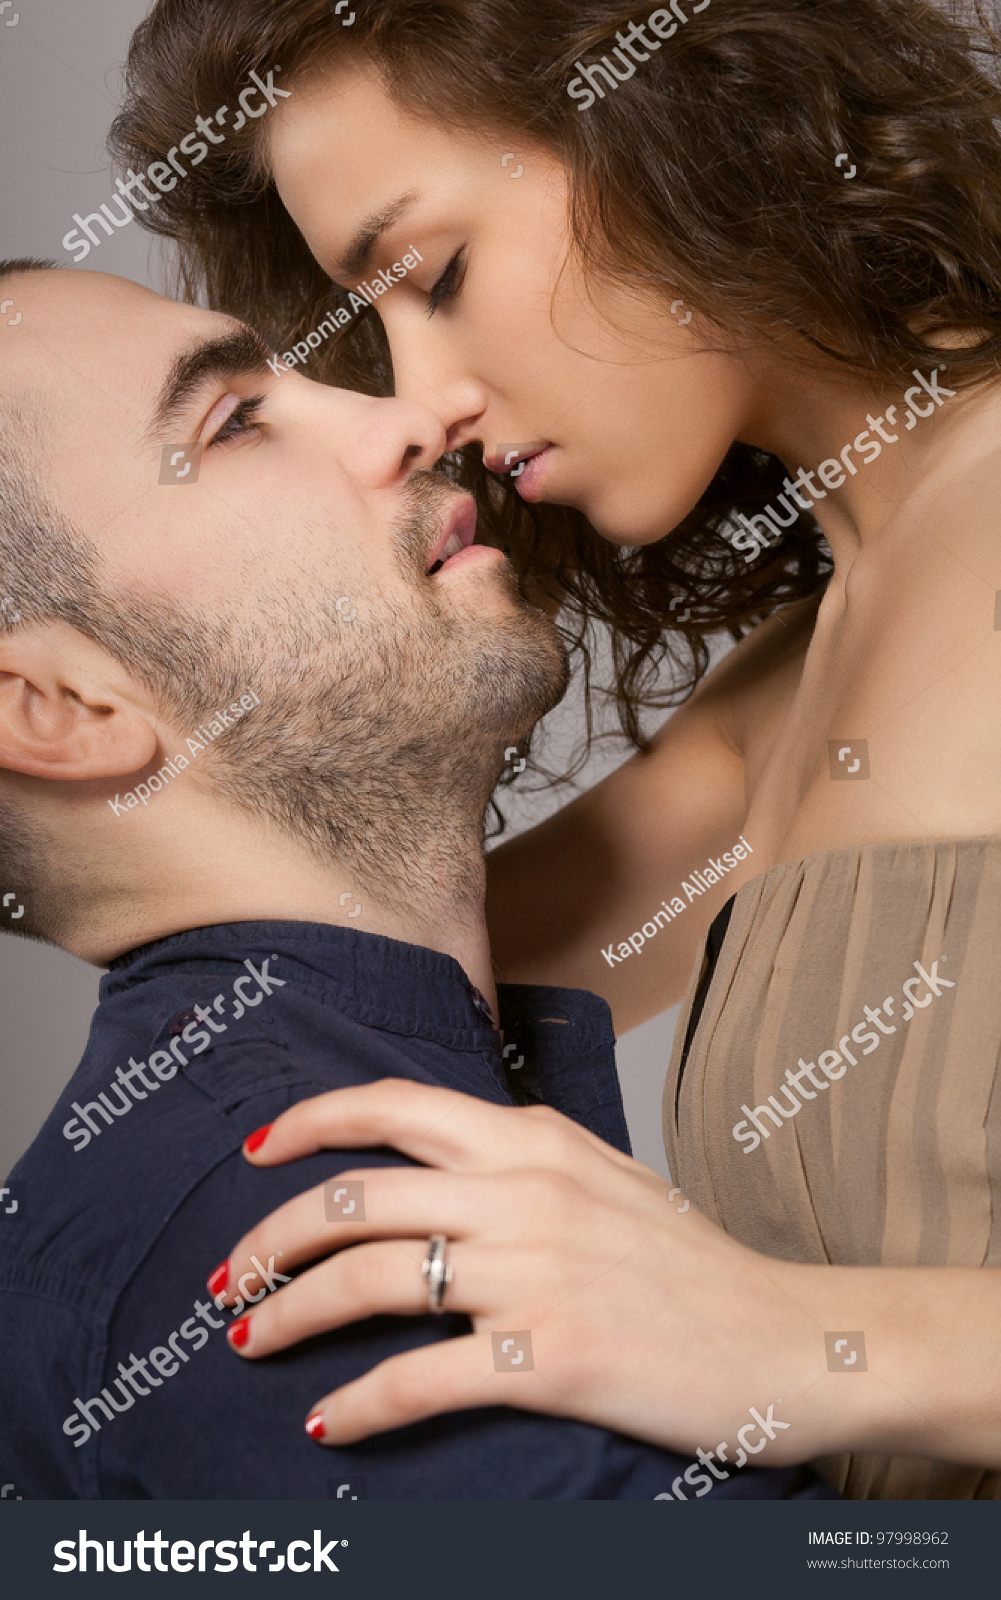 Boy and girl sexy kiss